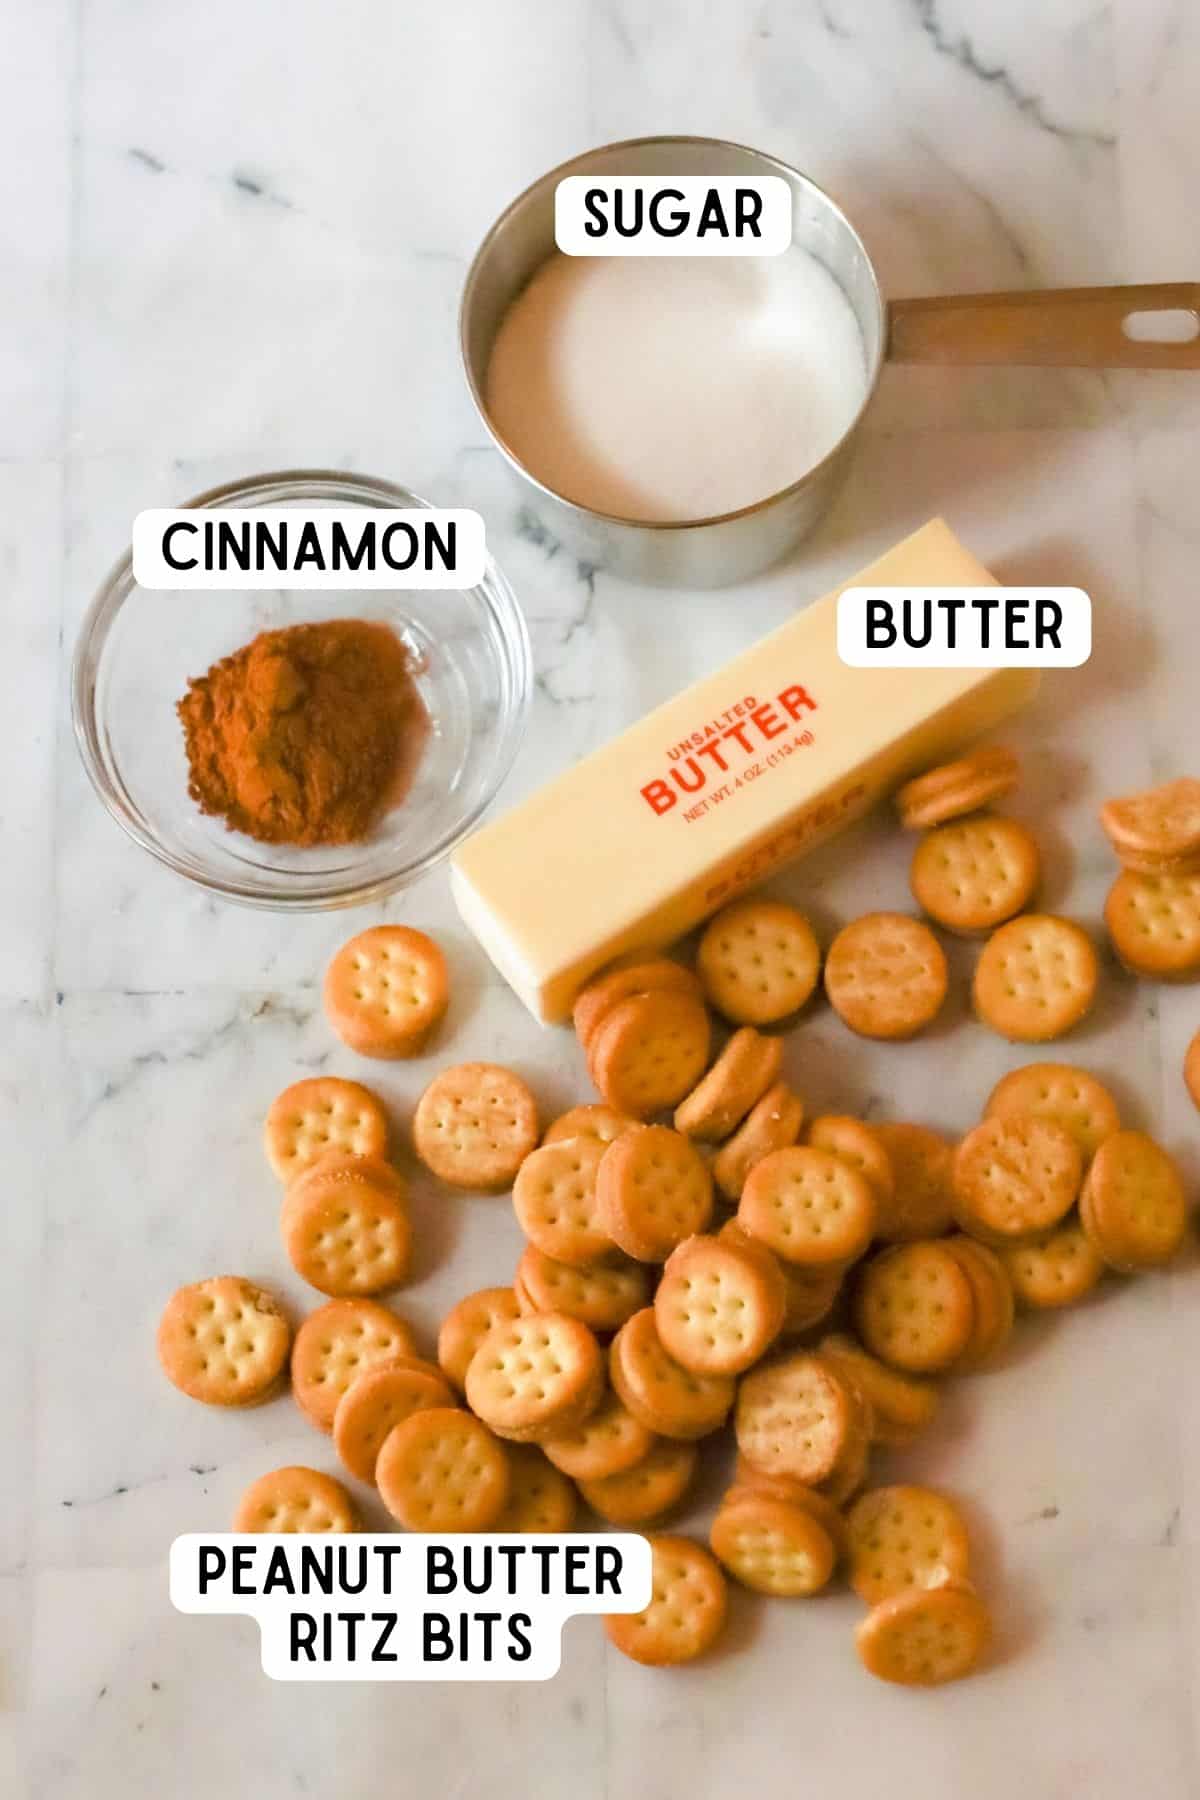 Churro Ritz Bites Ingredients: white sugar, ground cinnamon, stick of butter. and peanut butter Ritz Bits.